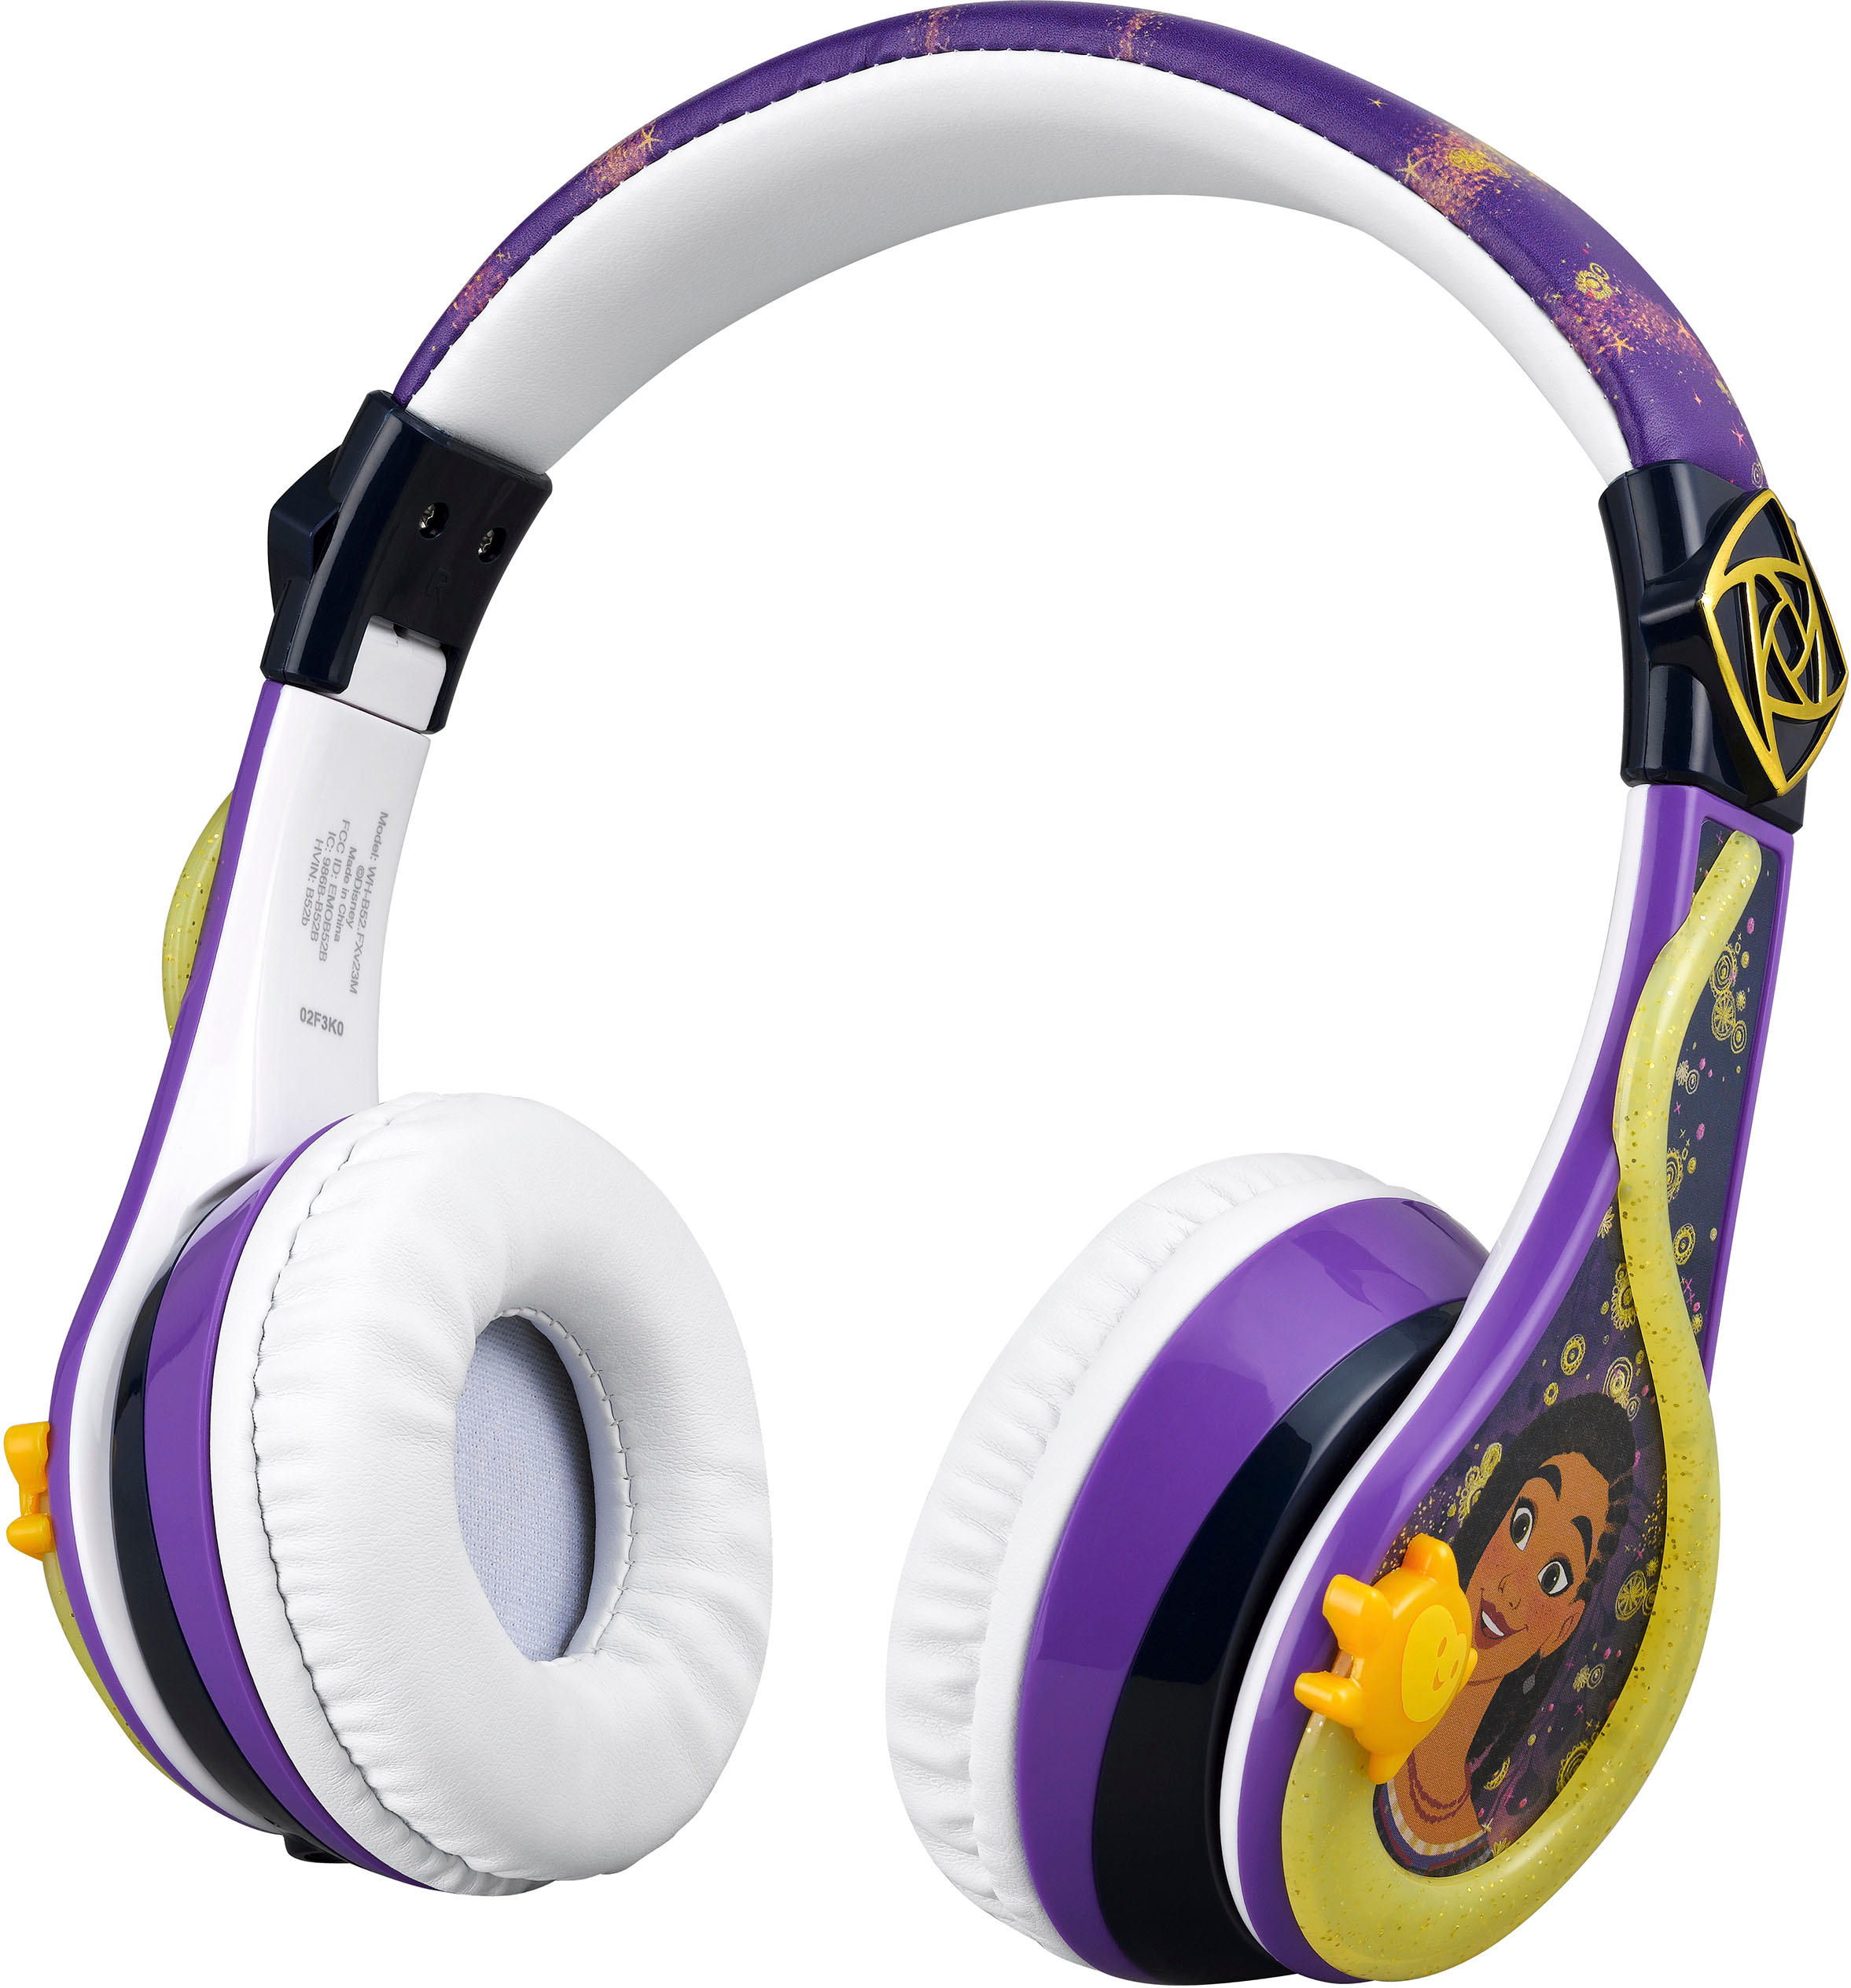 Angle View: eKids - Disney Wish Wireless  Over-the-Ear Headphones - Purple